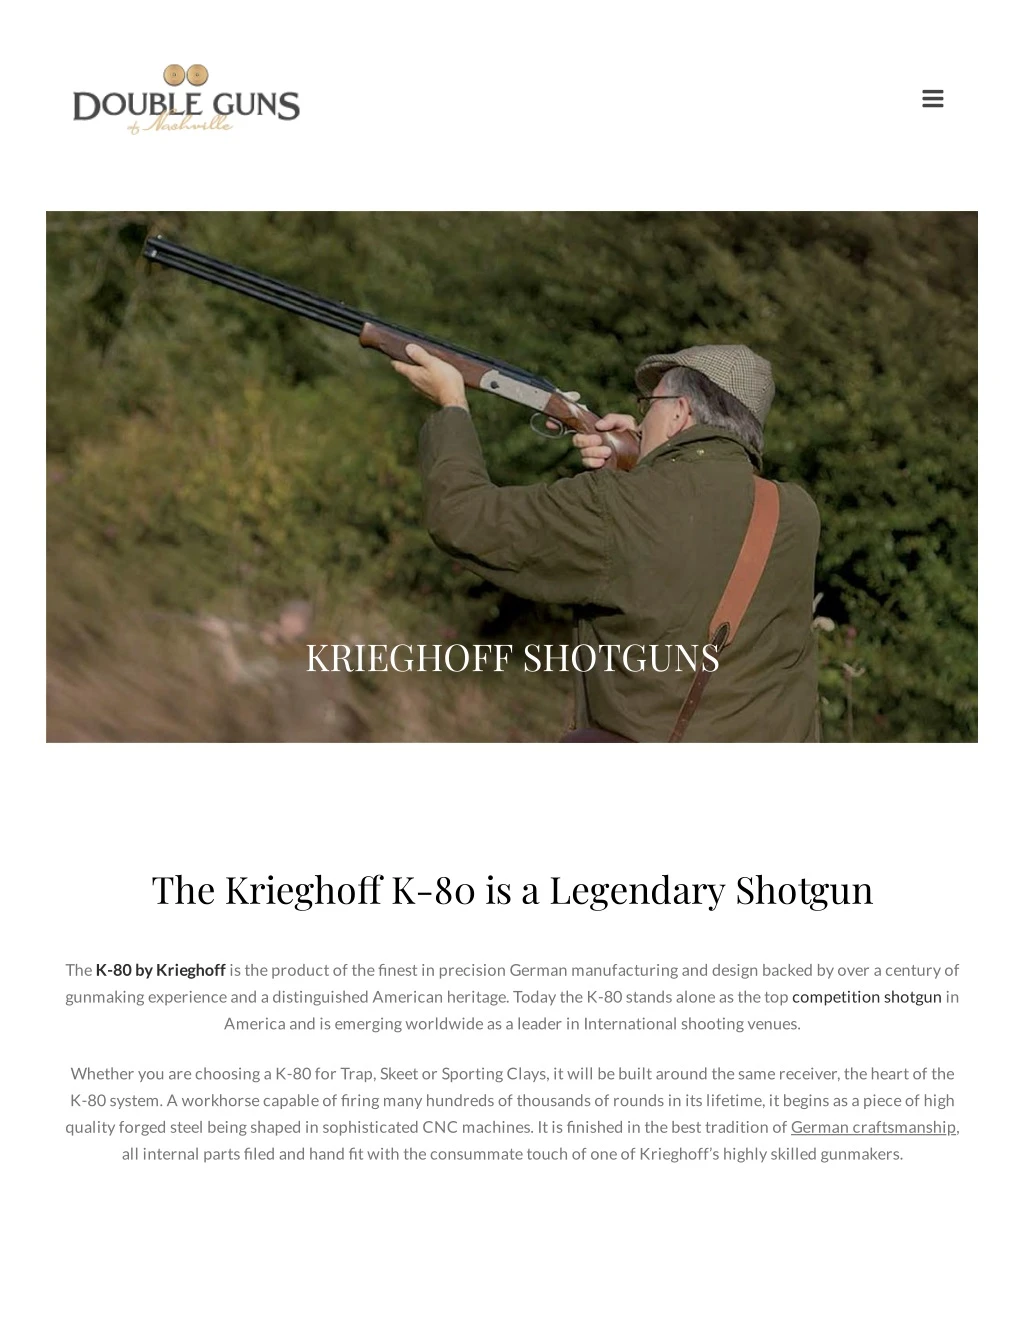 krieghoff shotguns